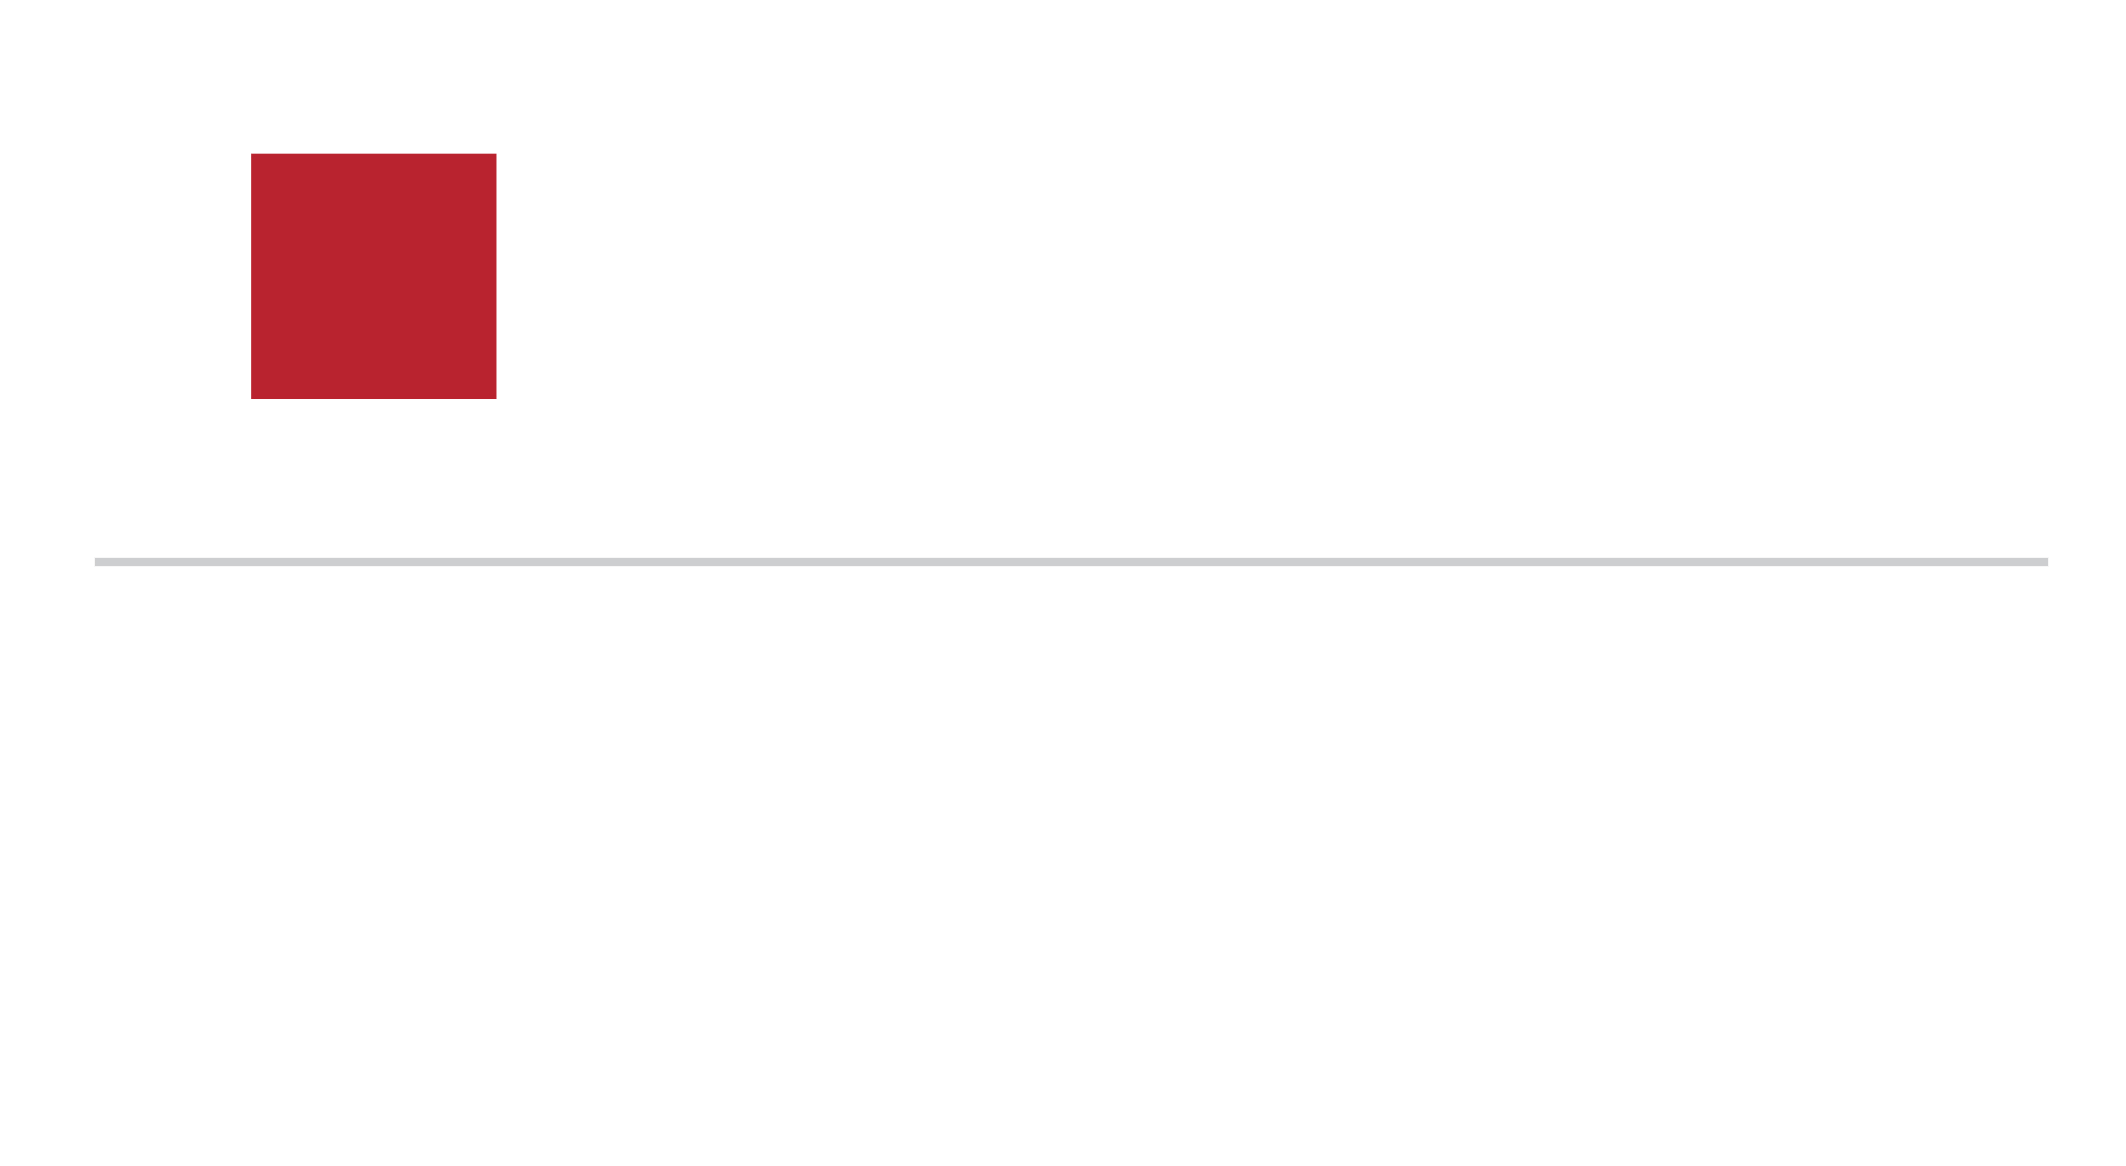 ping identity forgerock v2